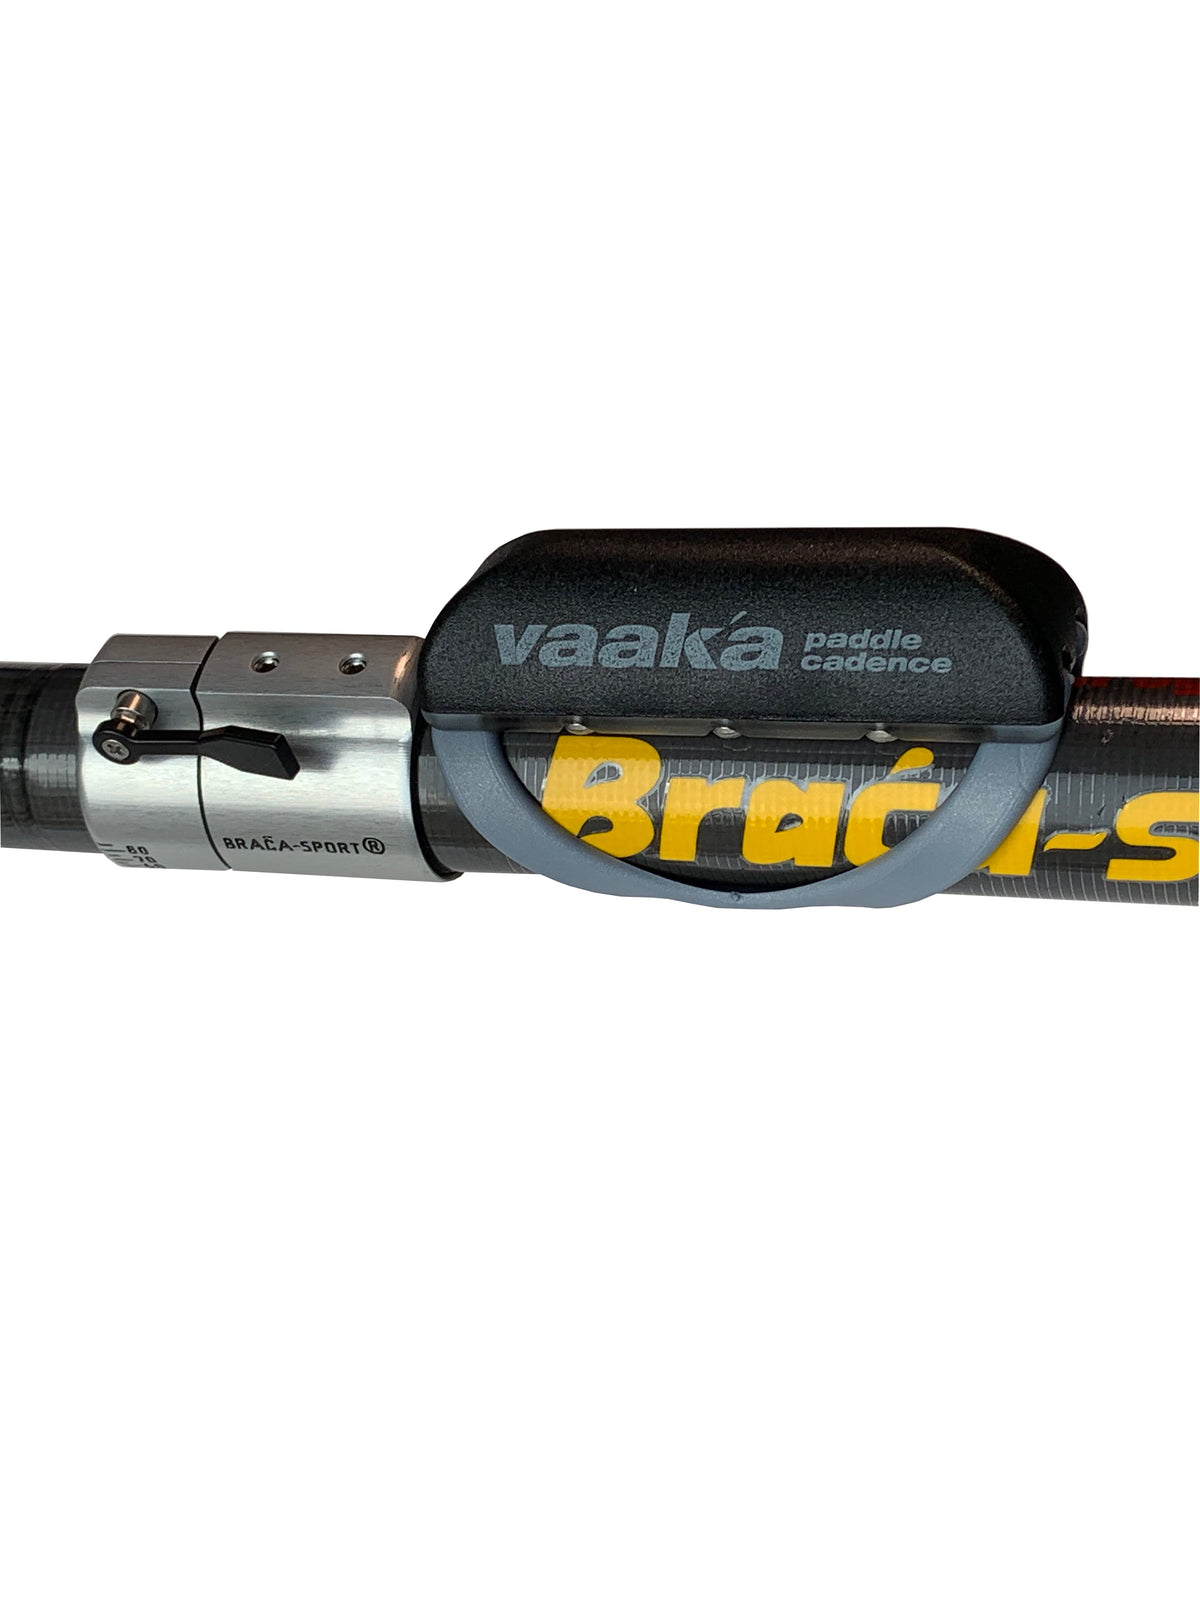 Vaaka Paddle Cadence Sensor for Bluetooth and Ant+ on Braca paddle shaft